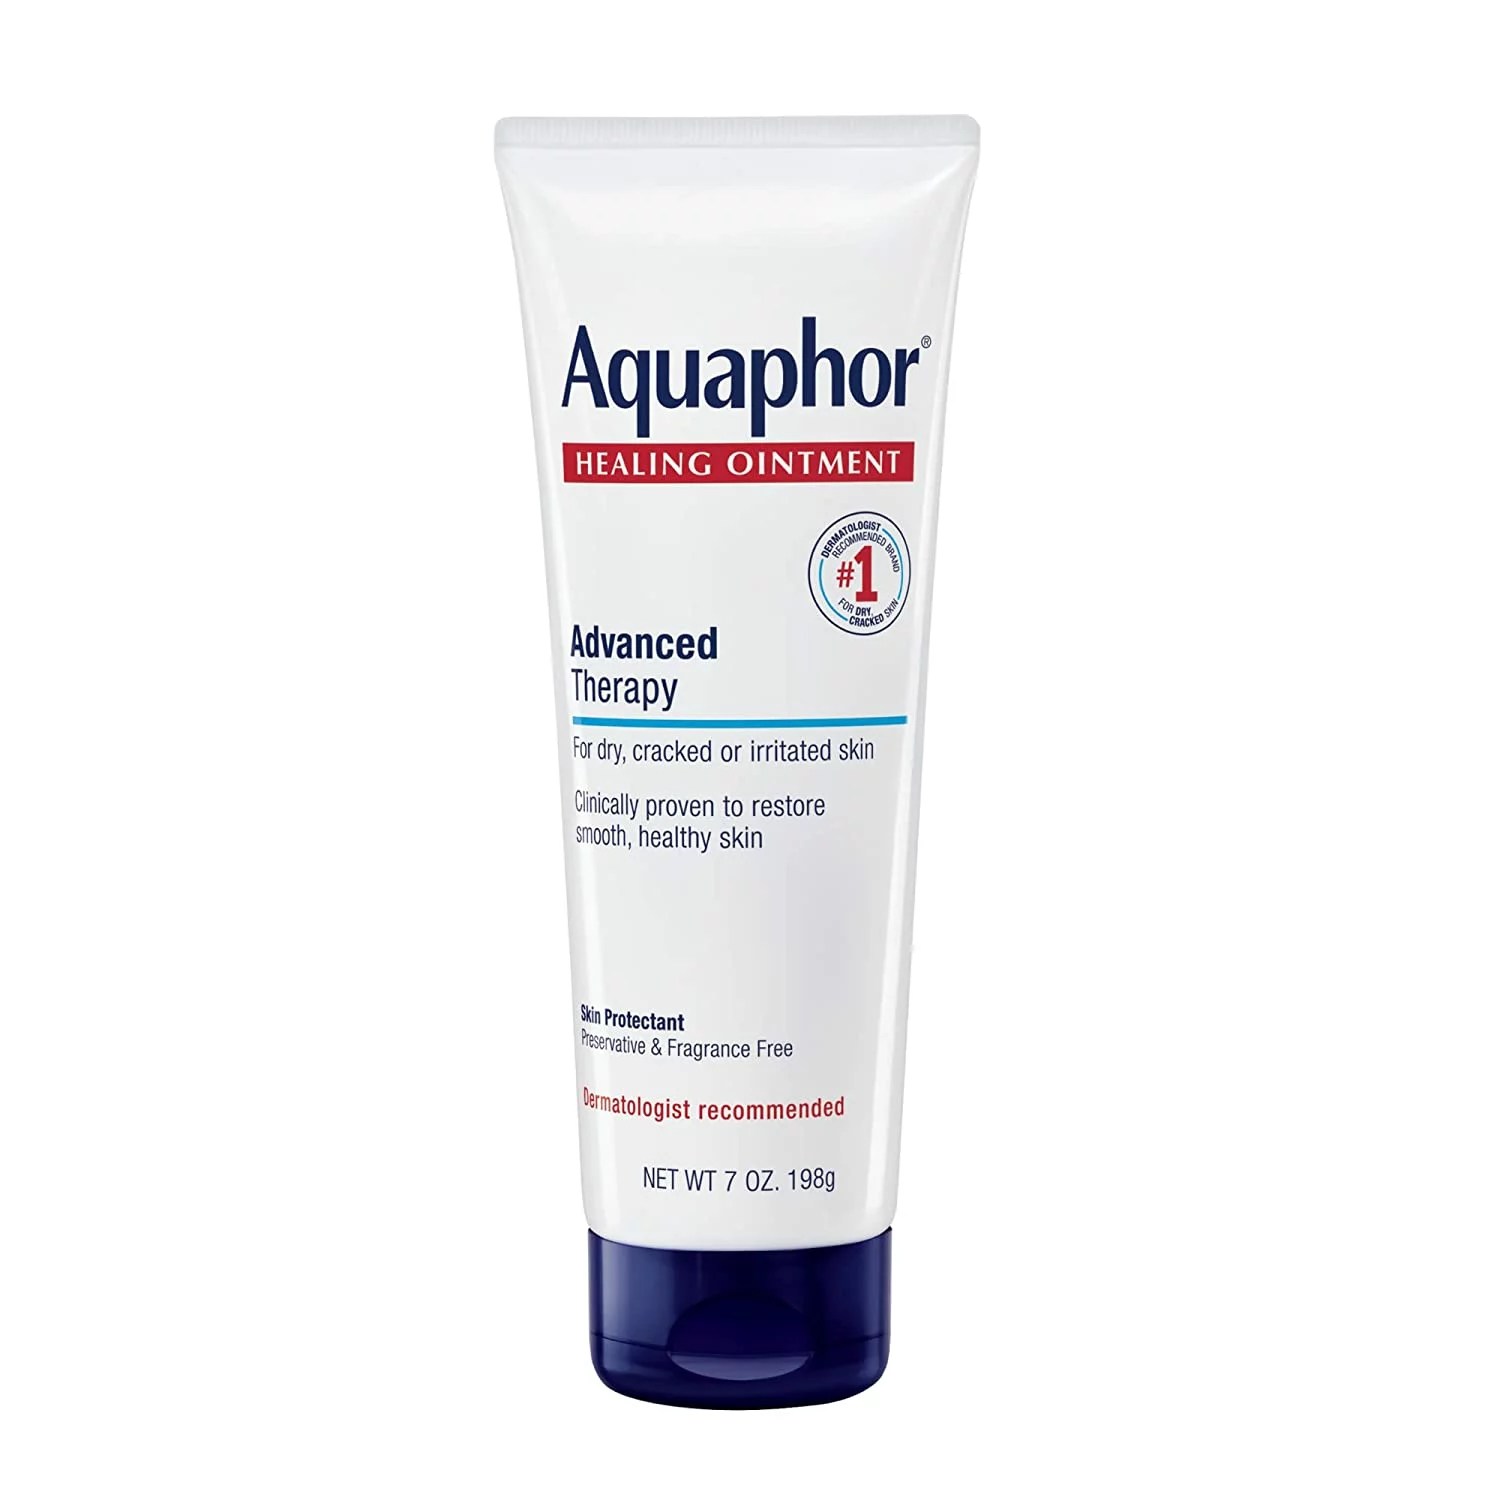 Aquaphor healing ointment moisturizer for dry skin